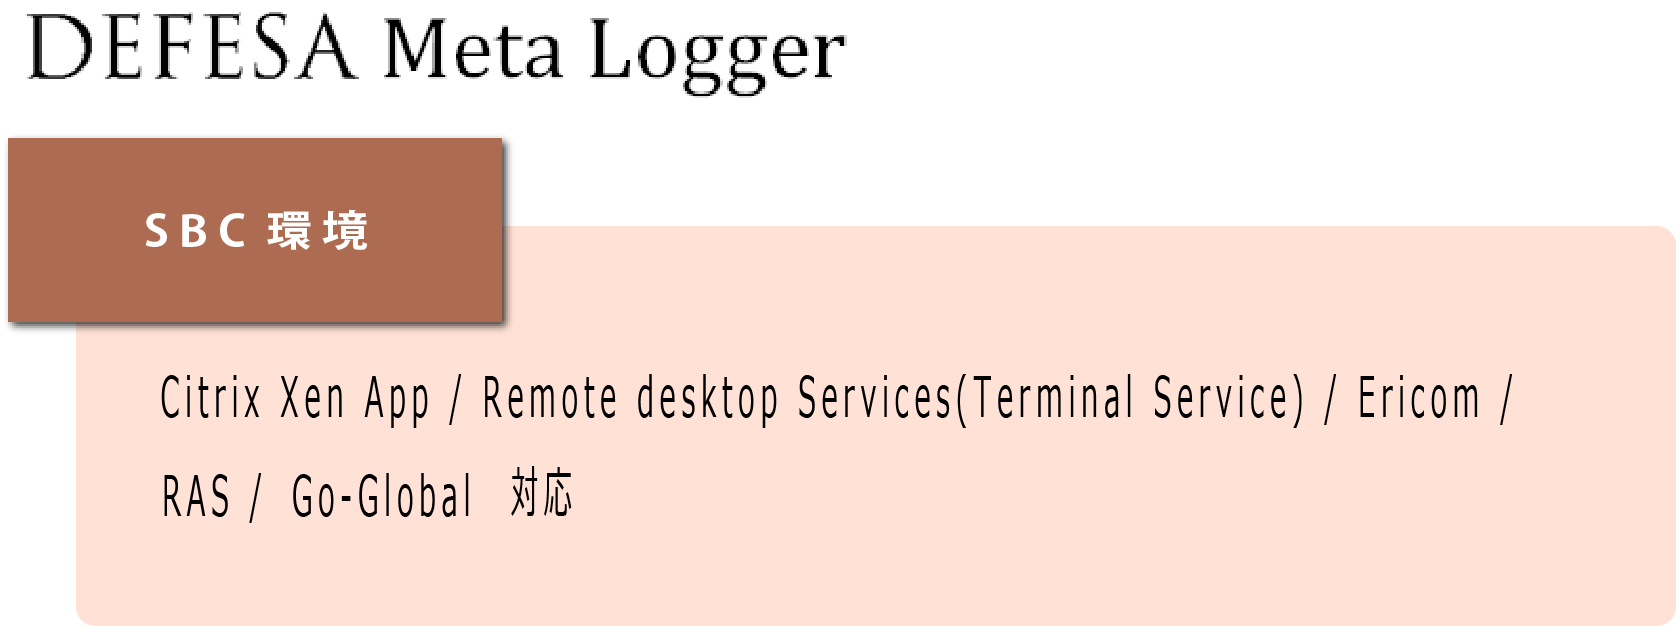 DEFESA Logger for Desktop